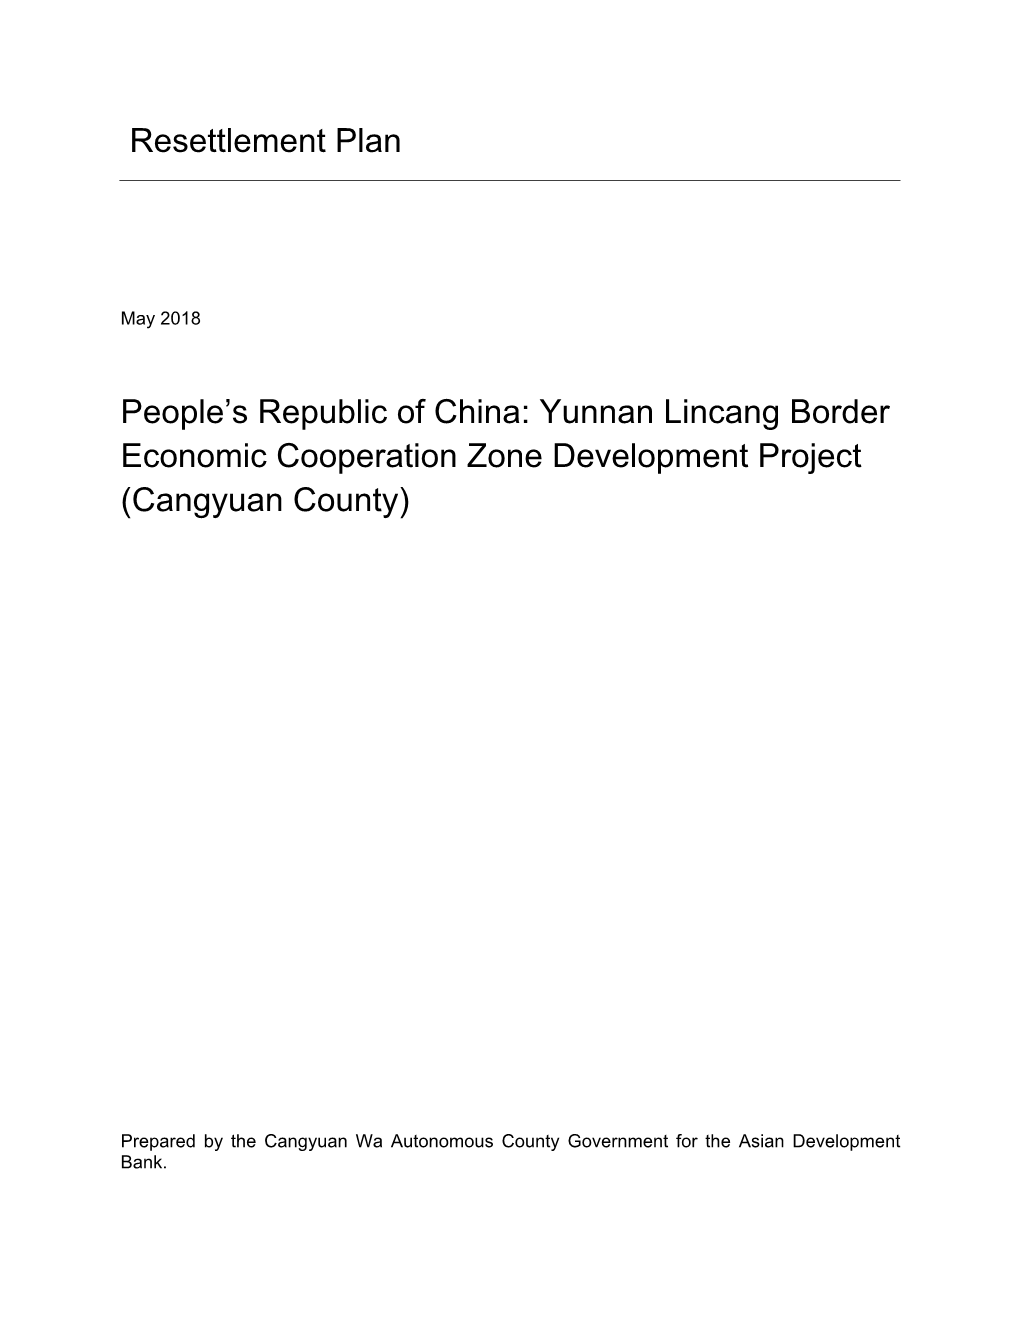 Yunnan Lincang Border Economic Cooperation Zone Development Project (Cangyuan County)